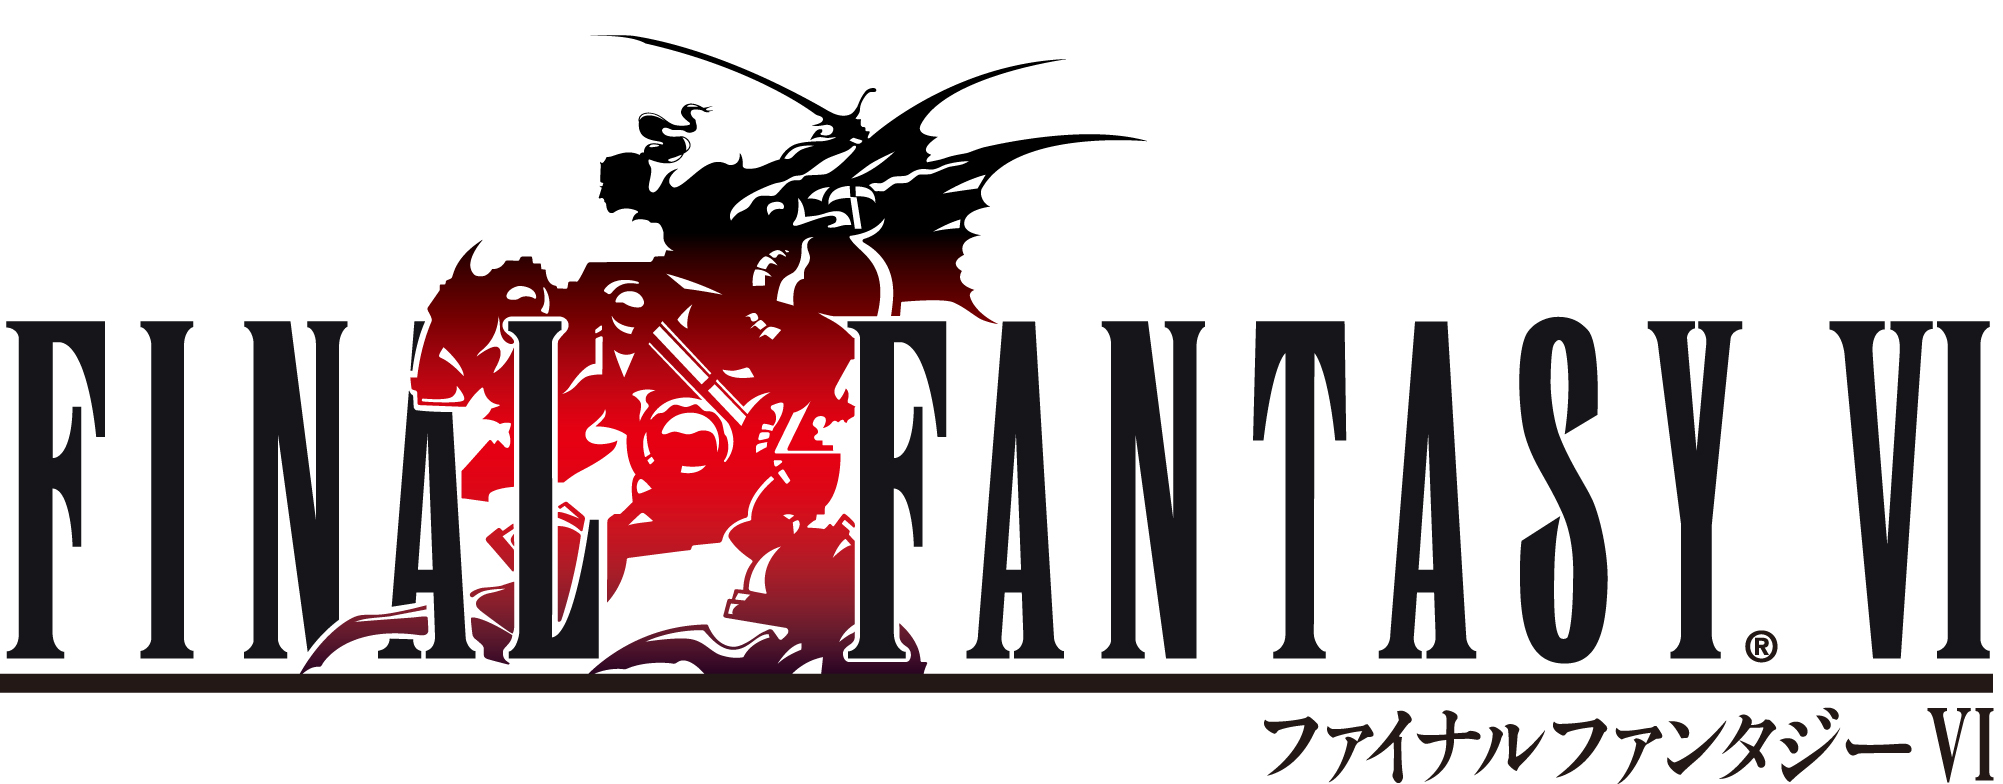 Final Fantasy VI 2014 Logo 001